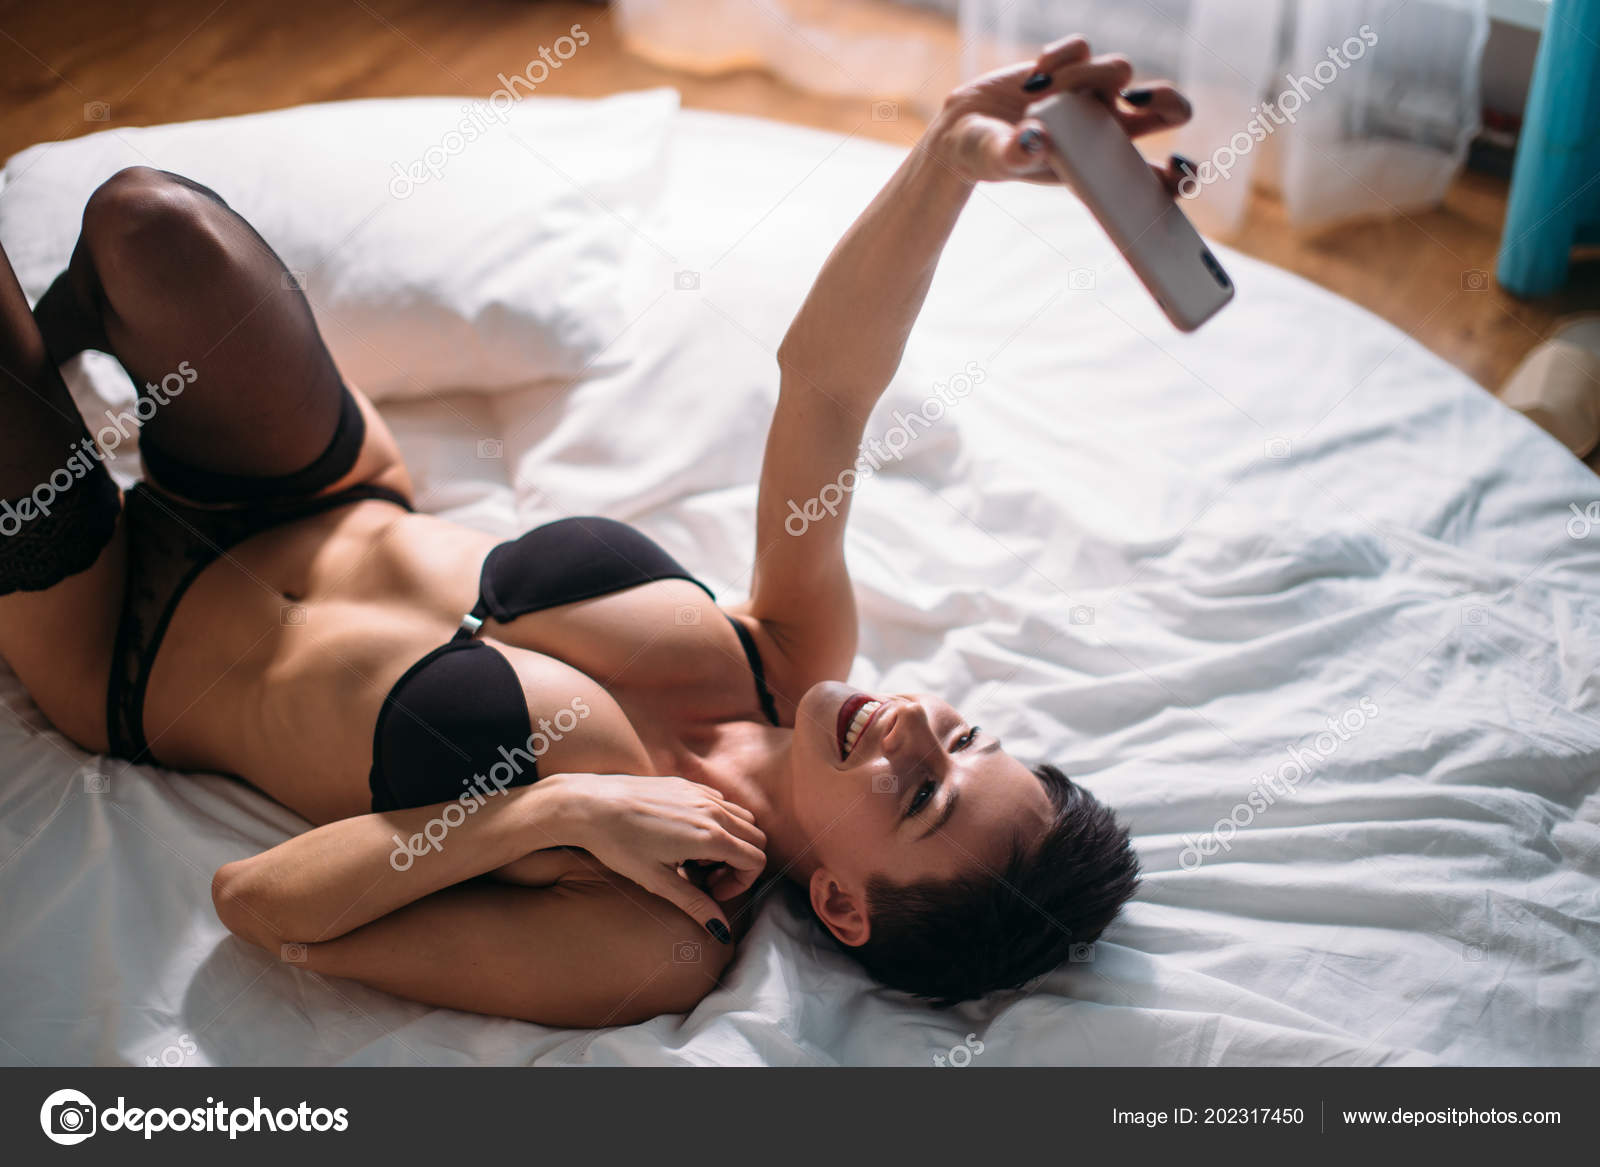 sexy seductive bed selfies